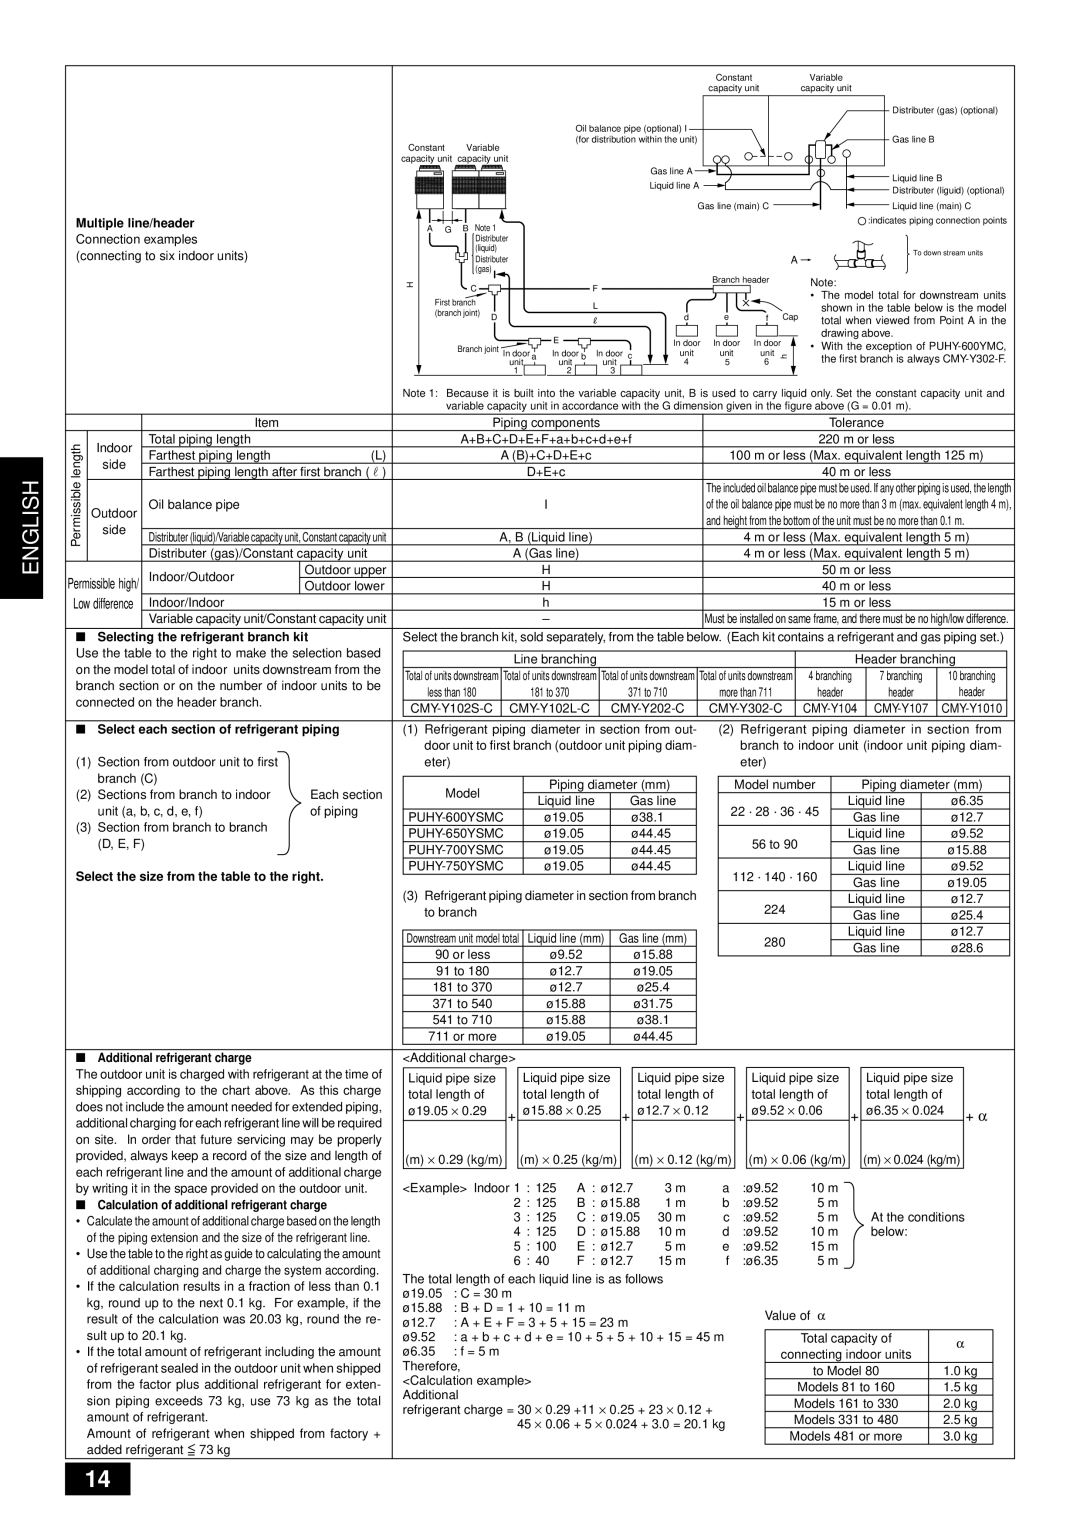 Mitsubishi Electronics PUHY-YMC installation manual English, Multiple line/header, Selecting the refrigerant branch kit 